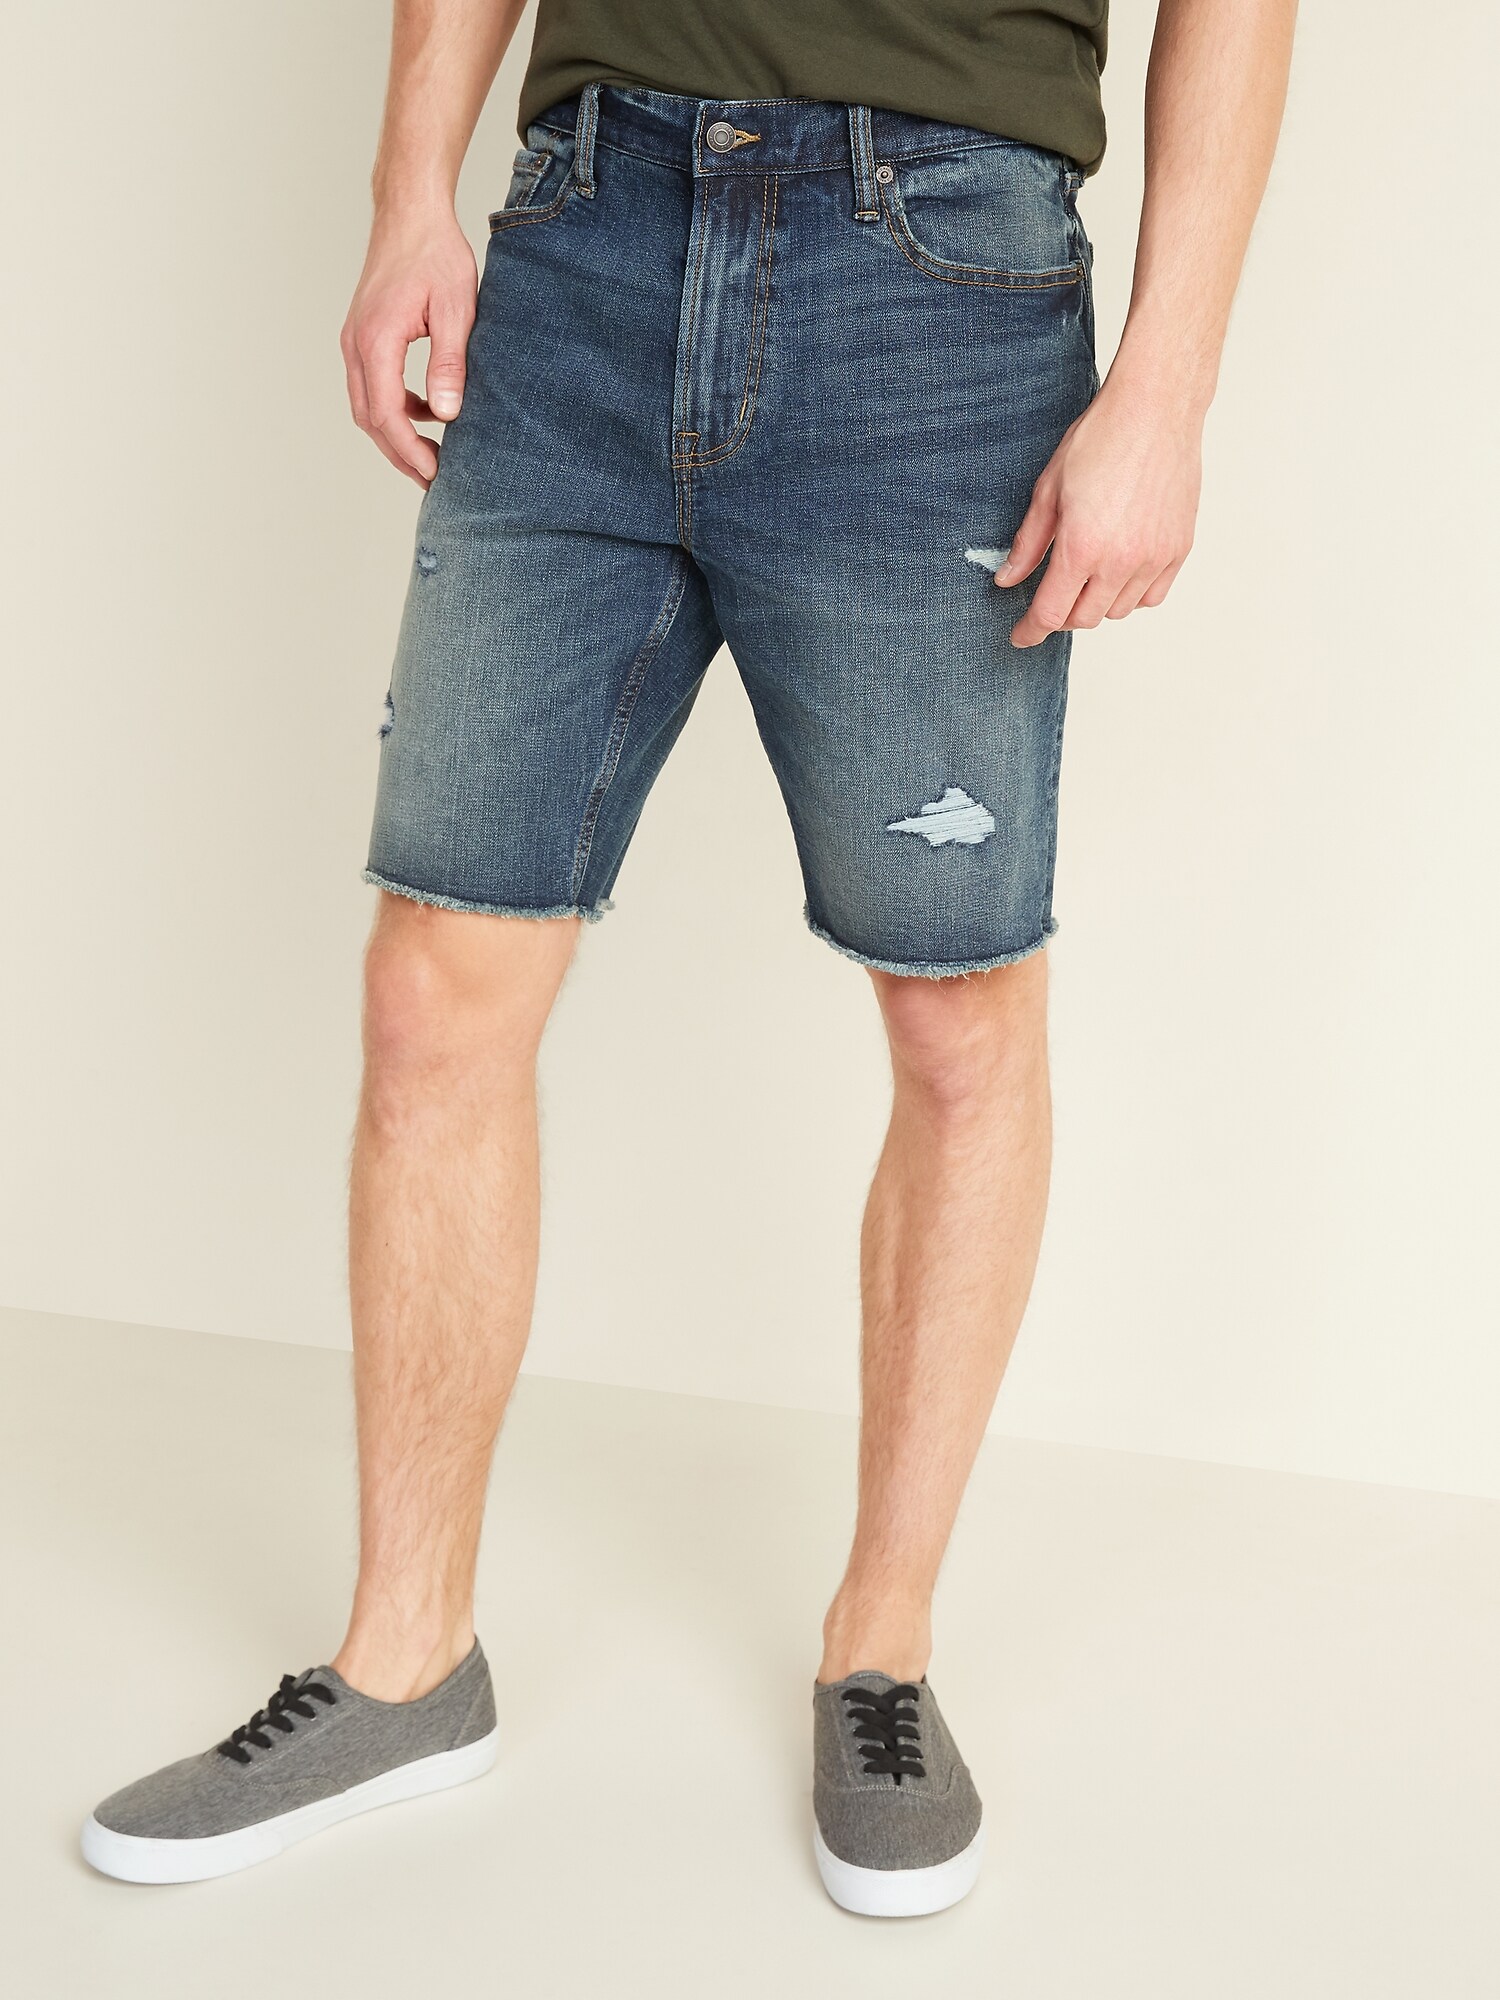 flex jean shorts